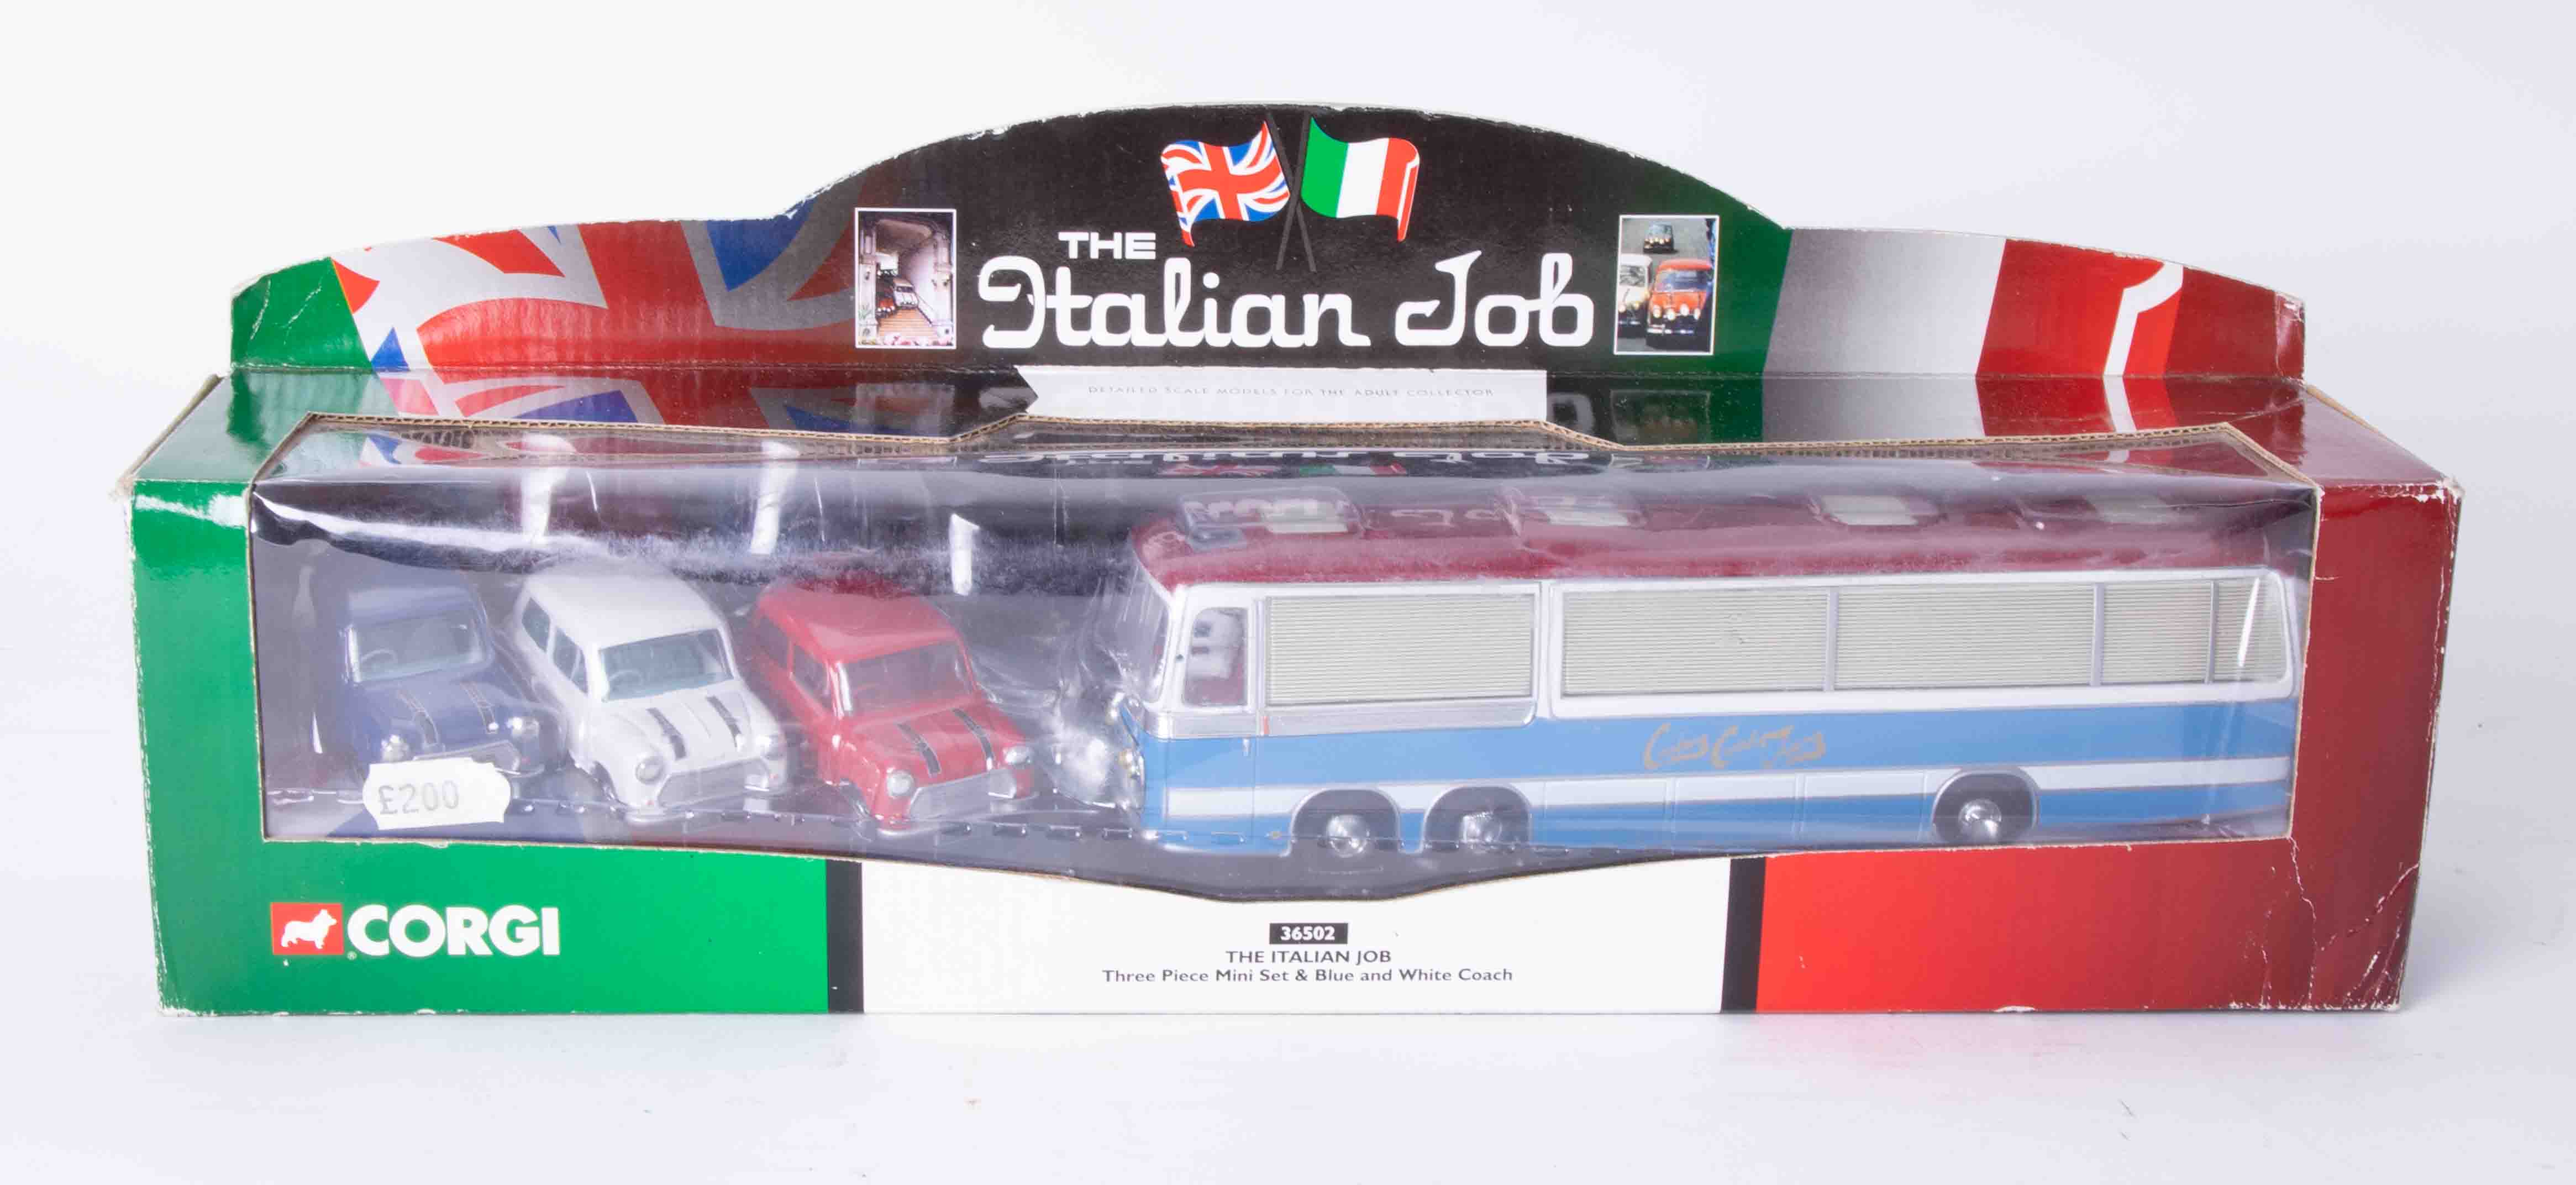 Corgi, 'The Italian Job' models, boxed.